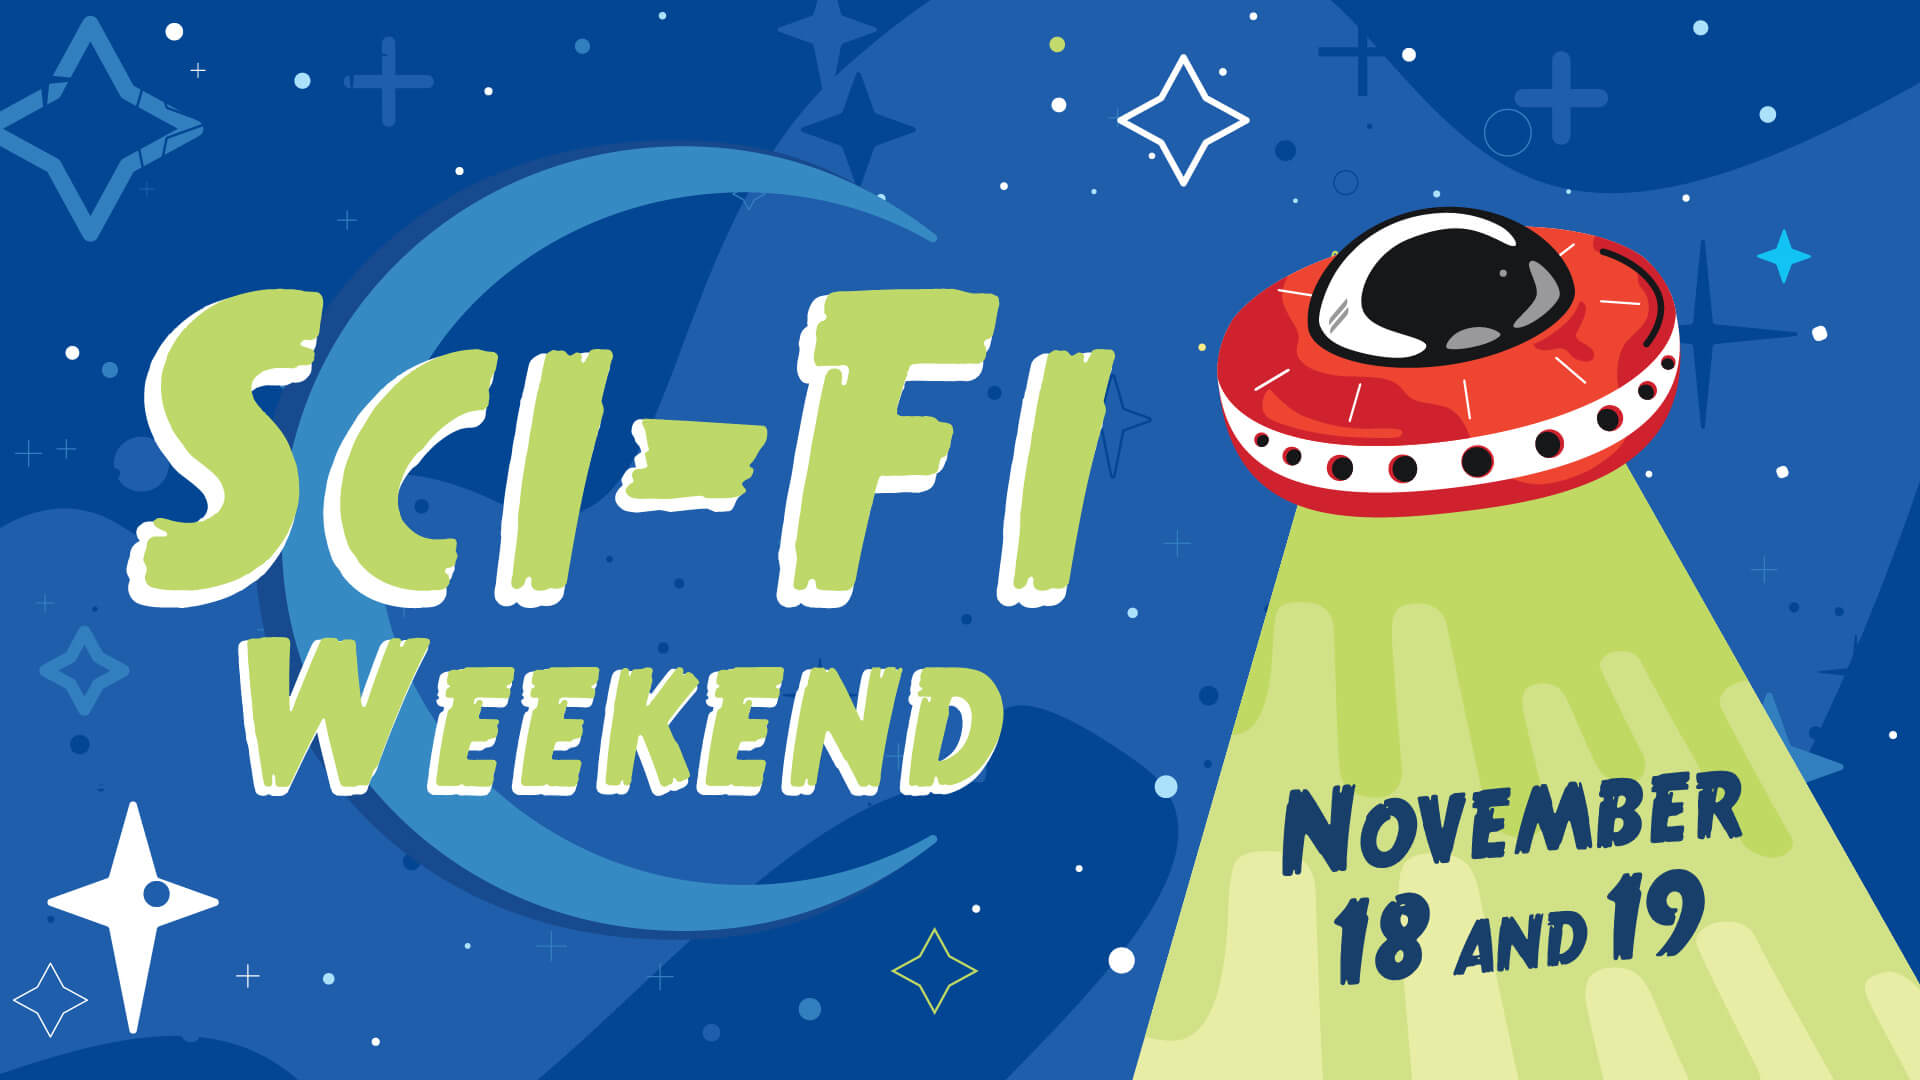 Sci-Fi Weekend - November 18 and 19